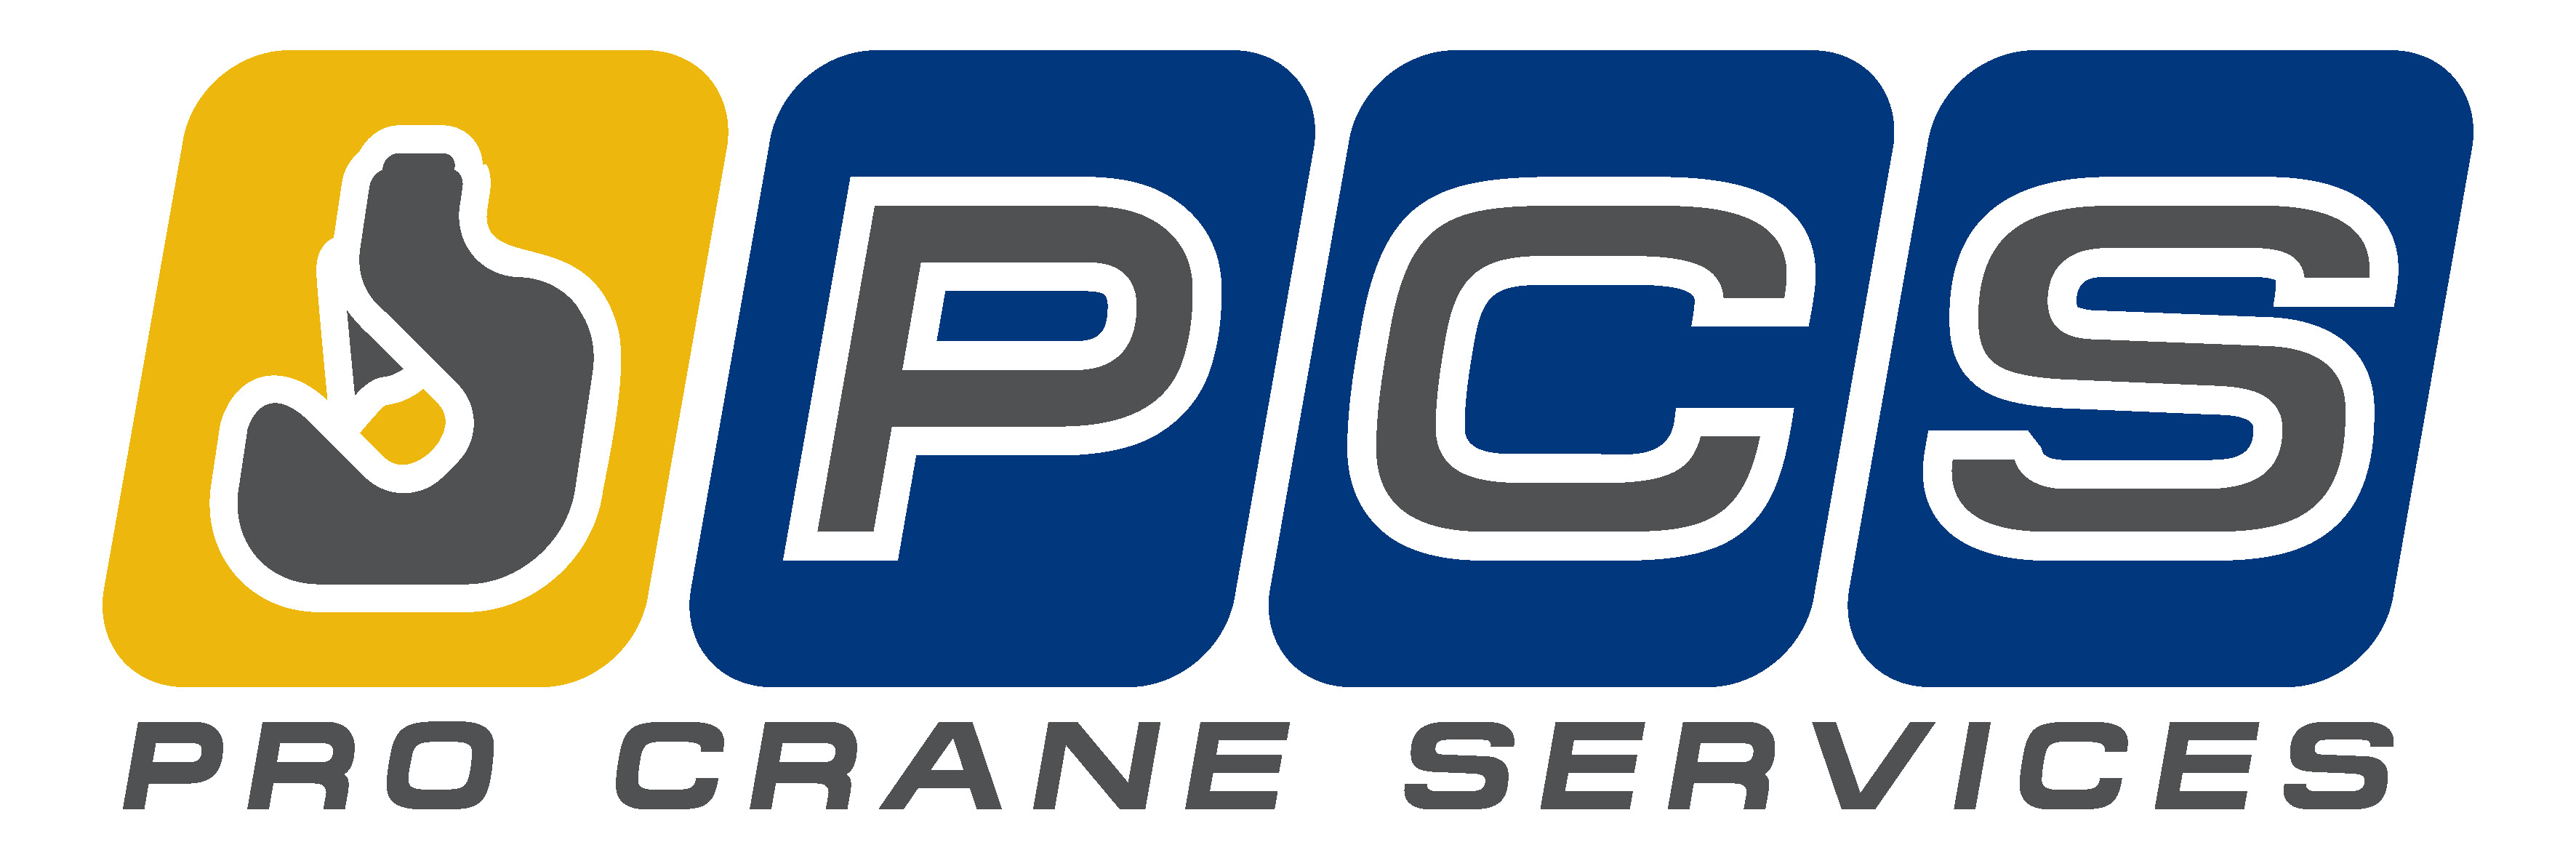 Pro Crane Services (Pty) Ltd logo